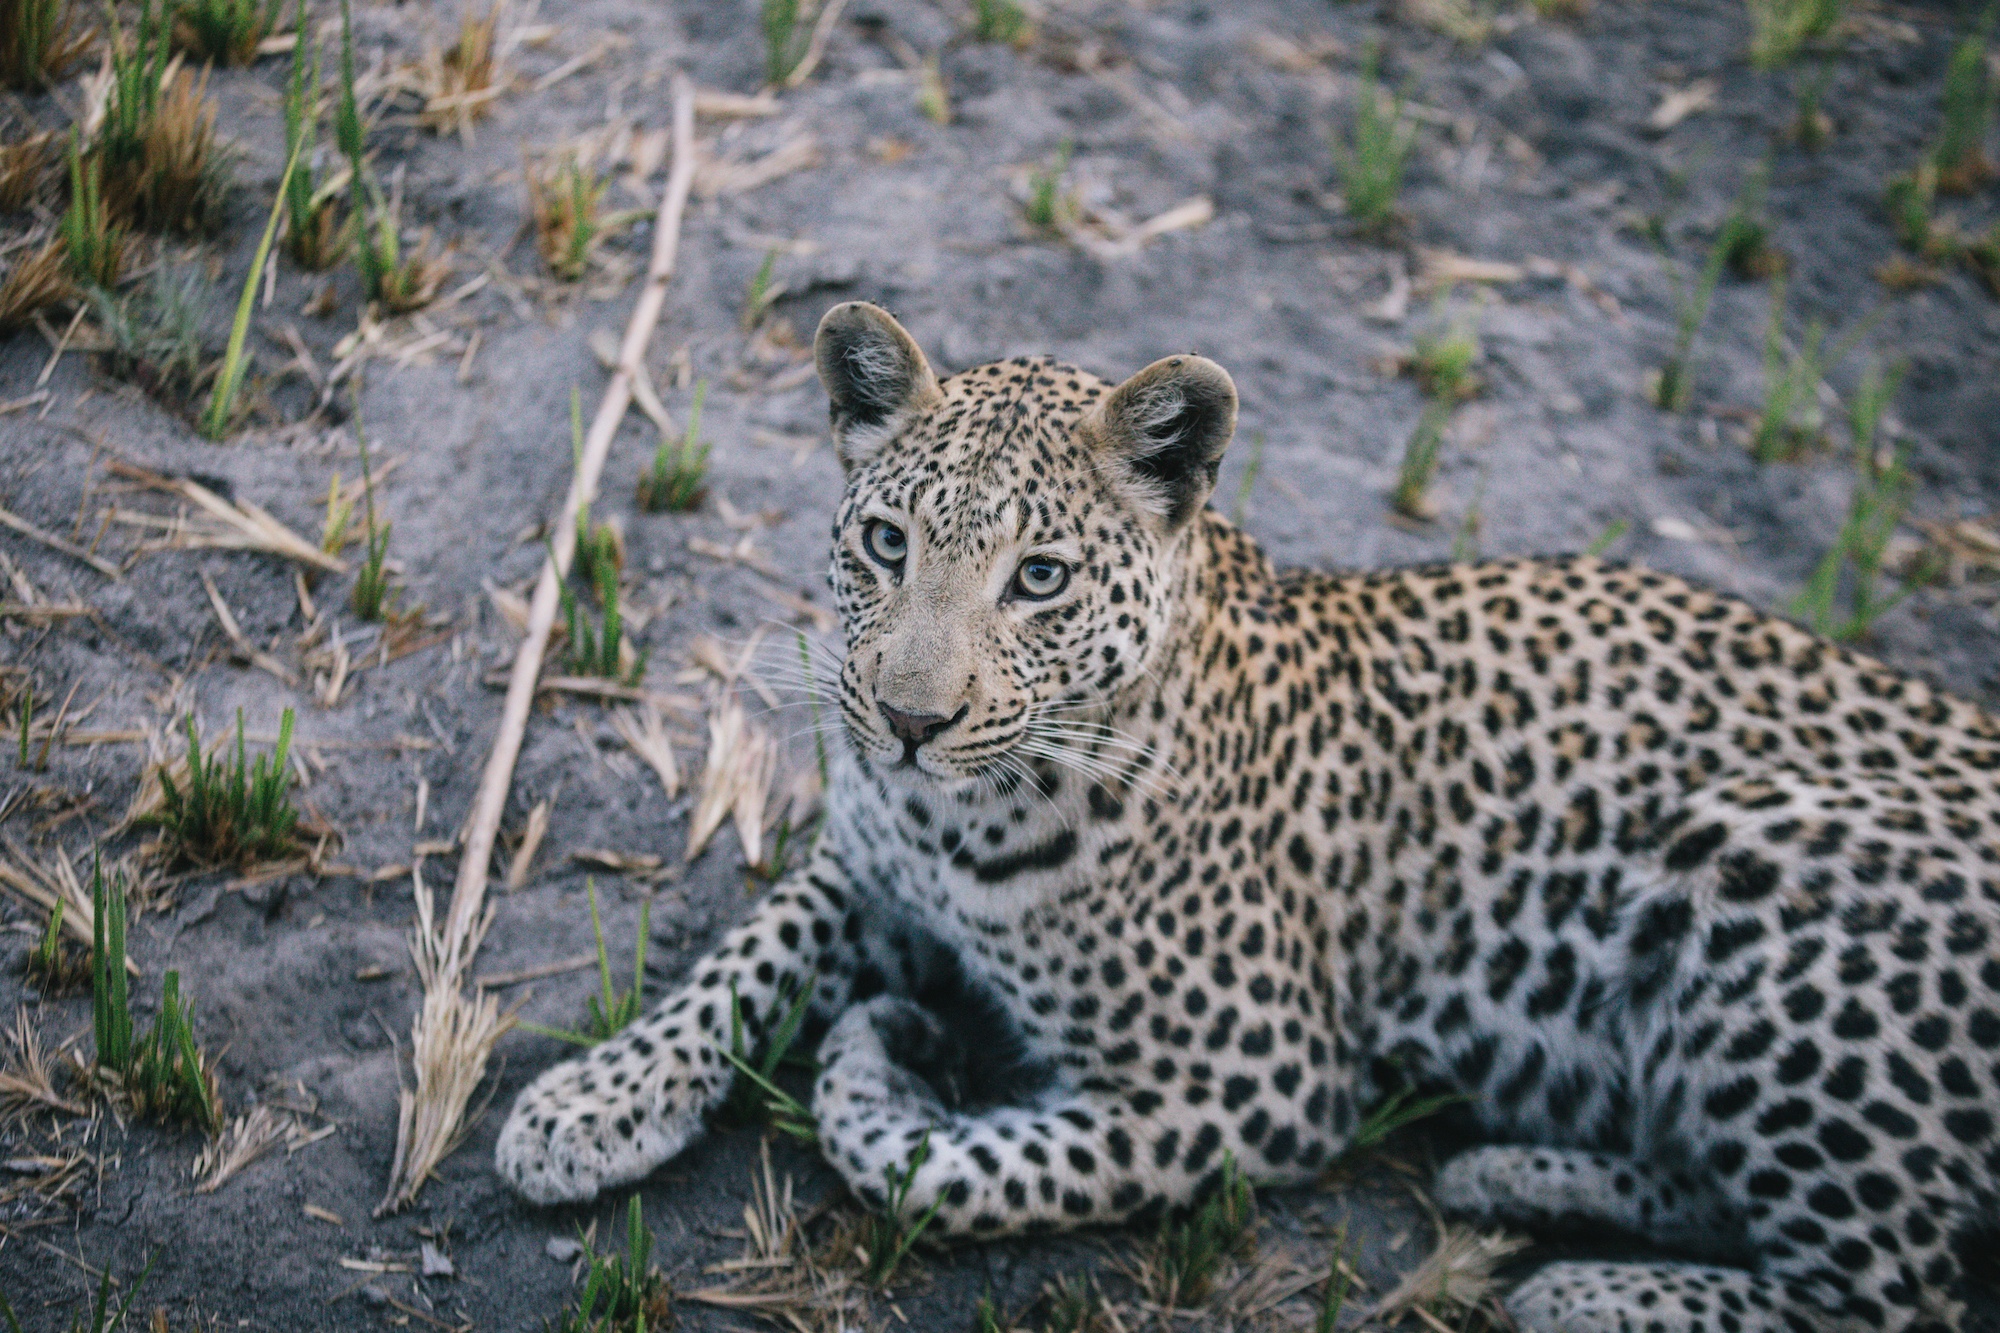 safari in botswana